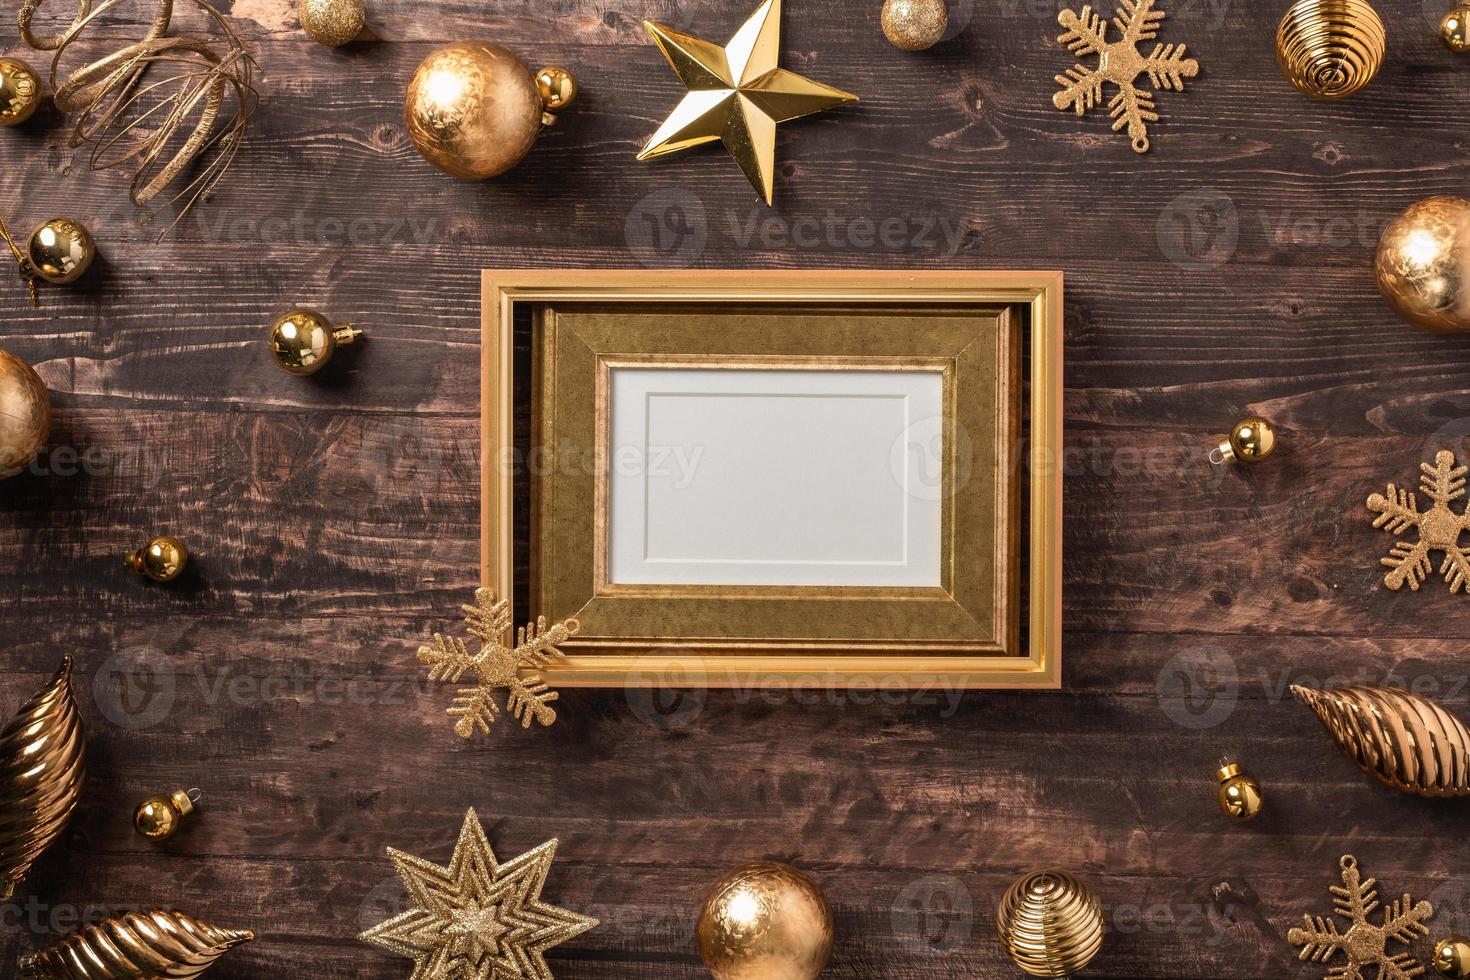 kerst gouden fotolijst en snuisterij, ster decoratie ornament op bruine houten tafel foto